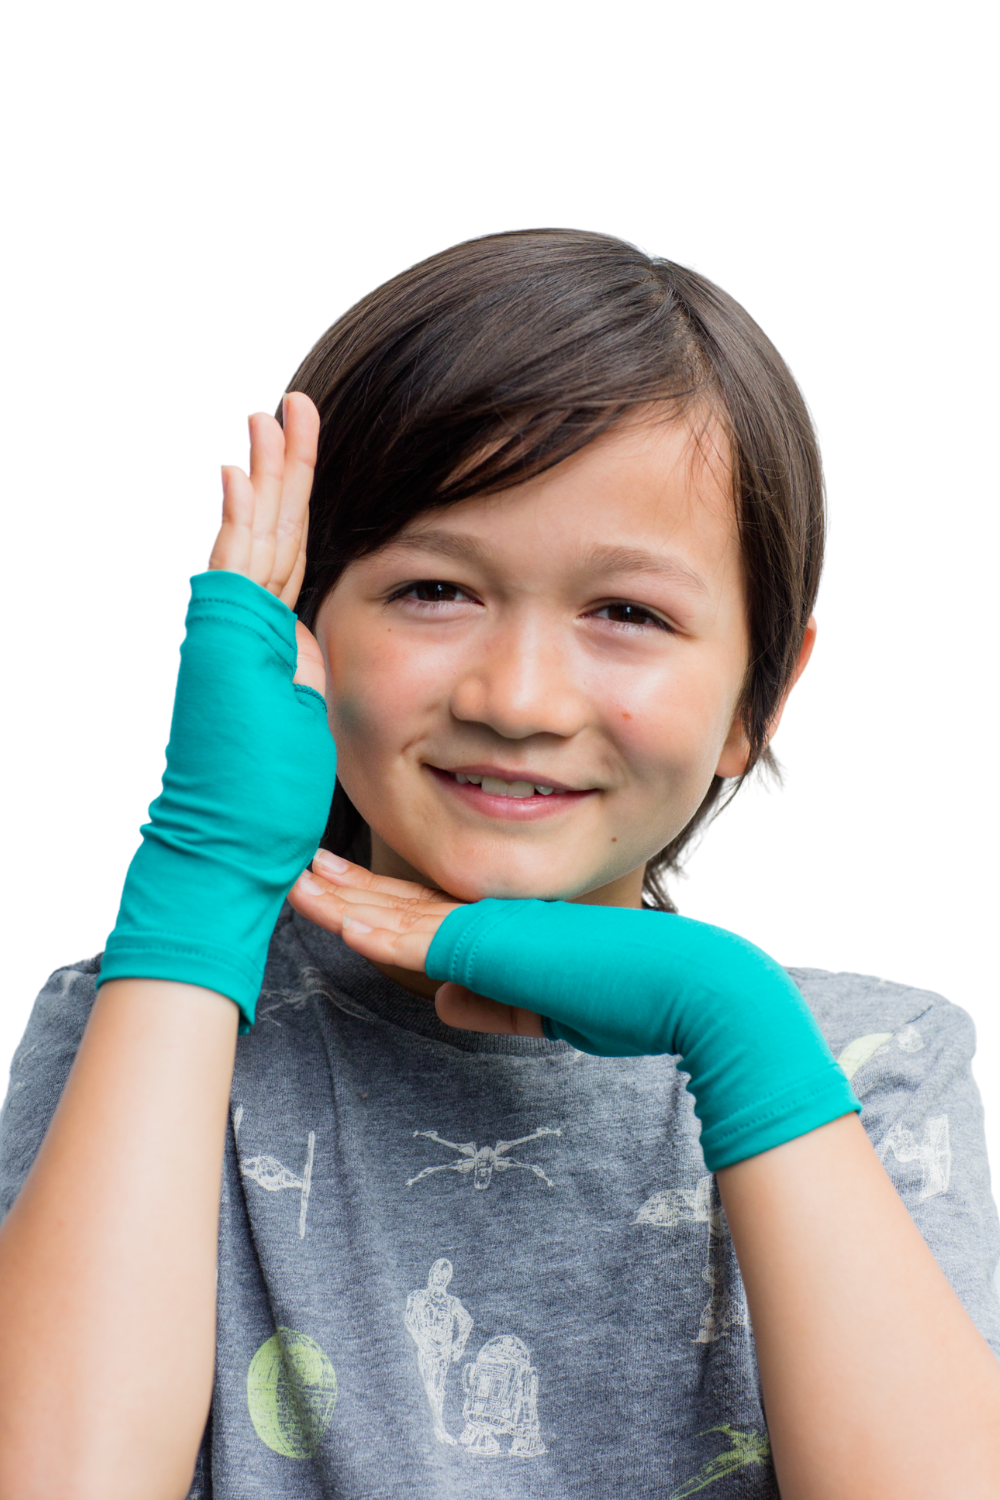 Showing off blue fingerless gloves